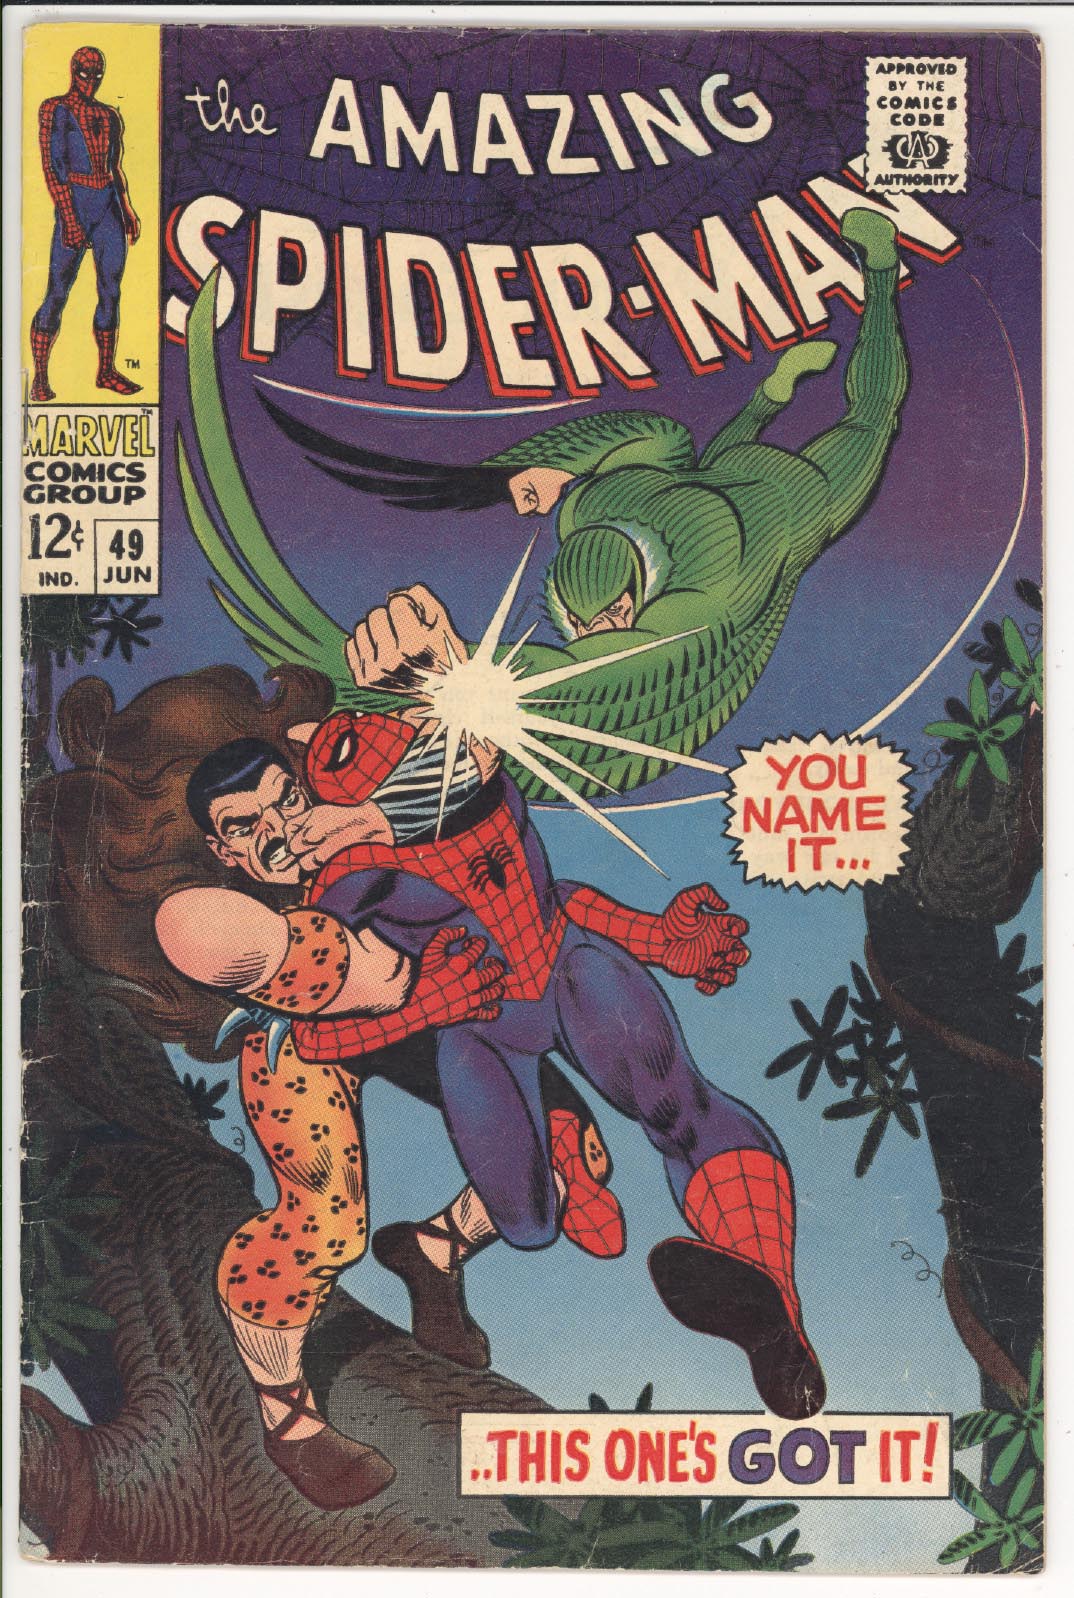 Amazing Spider-Man #49 front